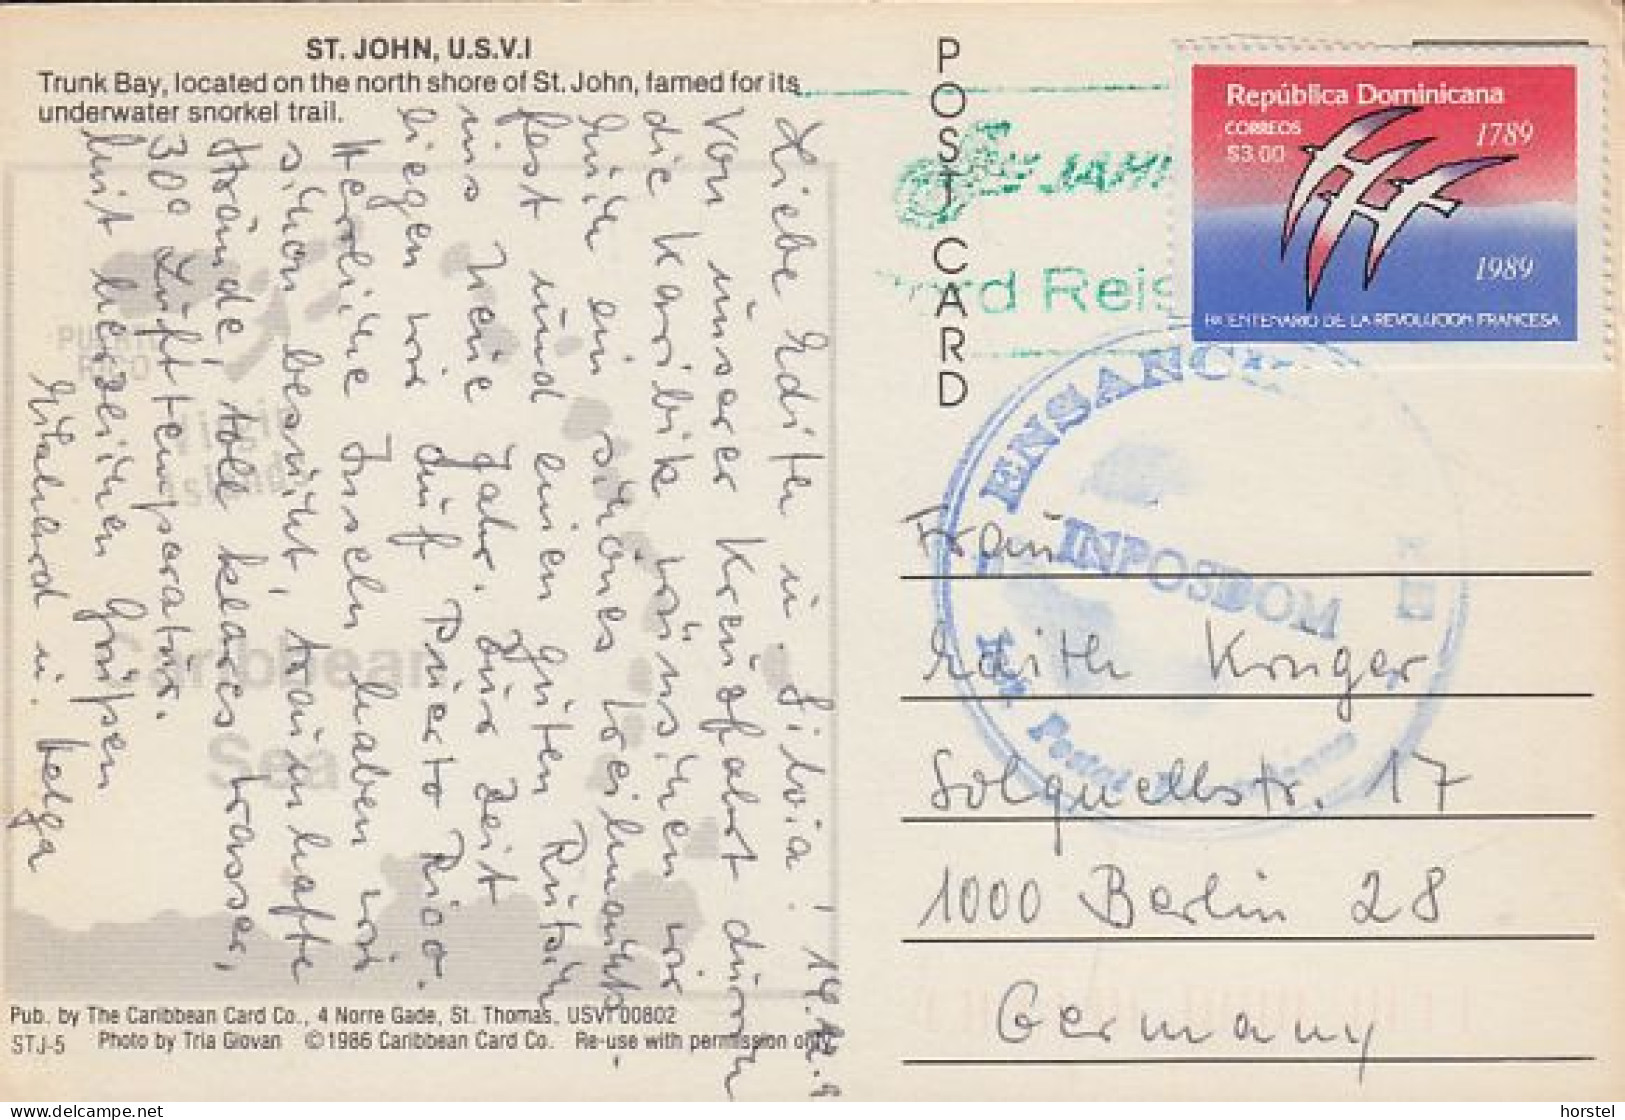 Jungferninseln - ST. John U.S.V.I - Trunk Bay - Nice Stamp "Rep.Dominicana" - Virgin Islands, US